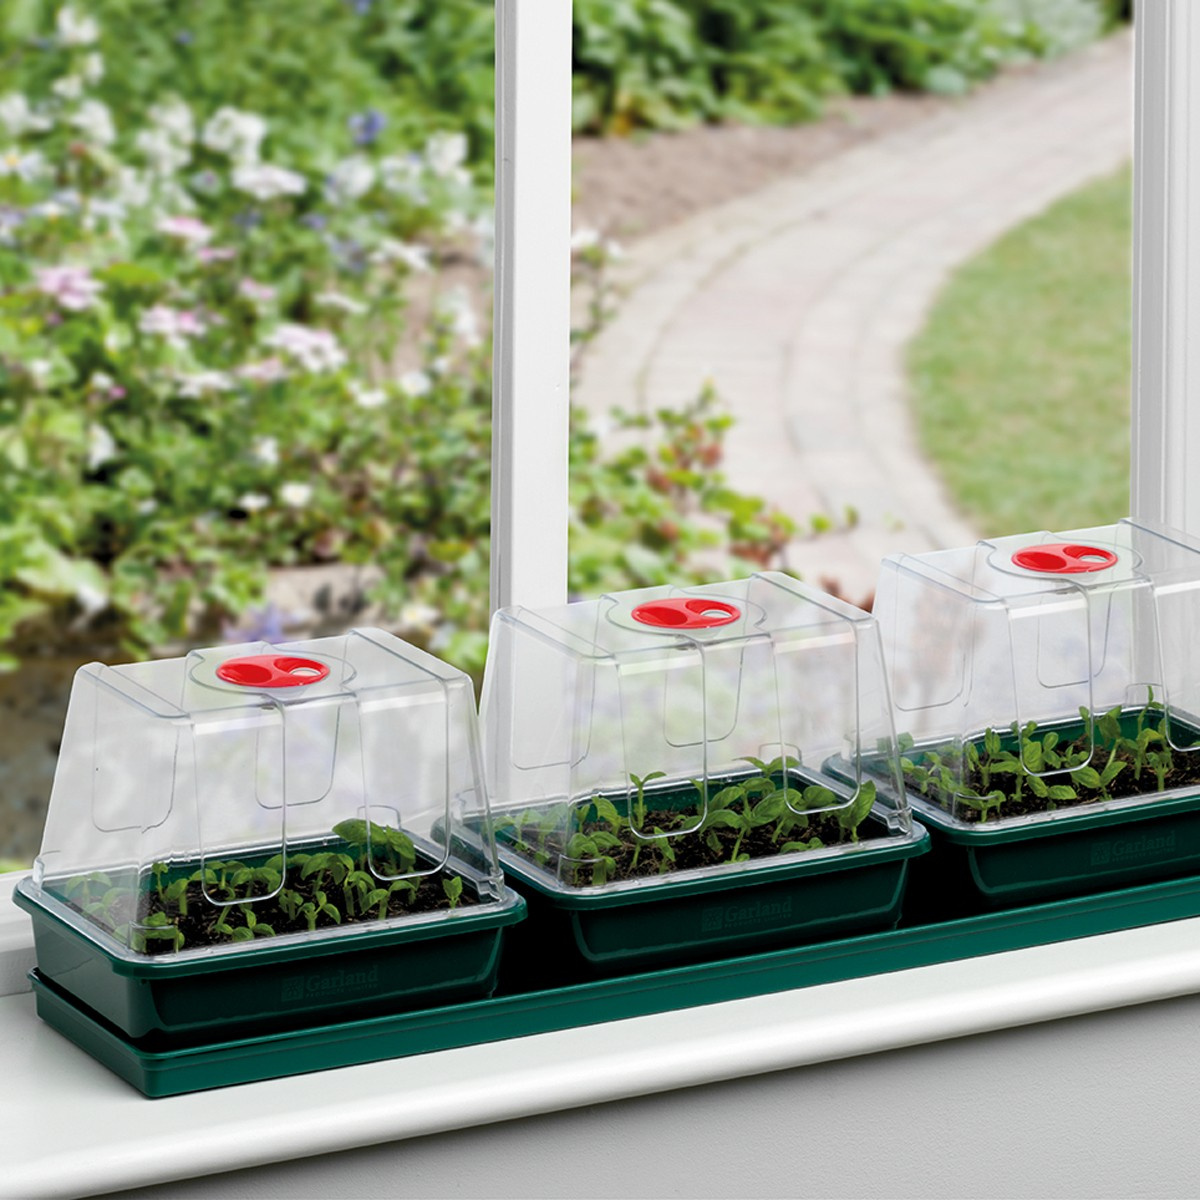 Garland mini greenhouse with self-watering - 3 trays